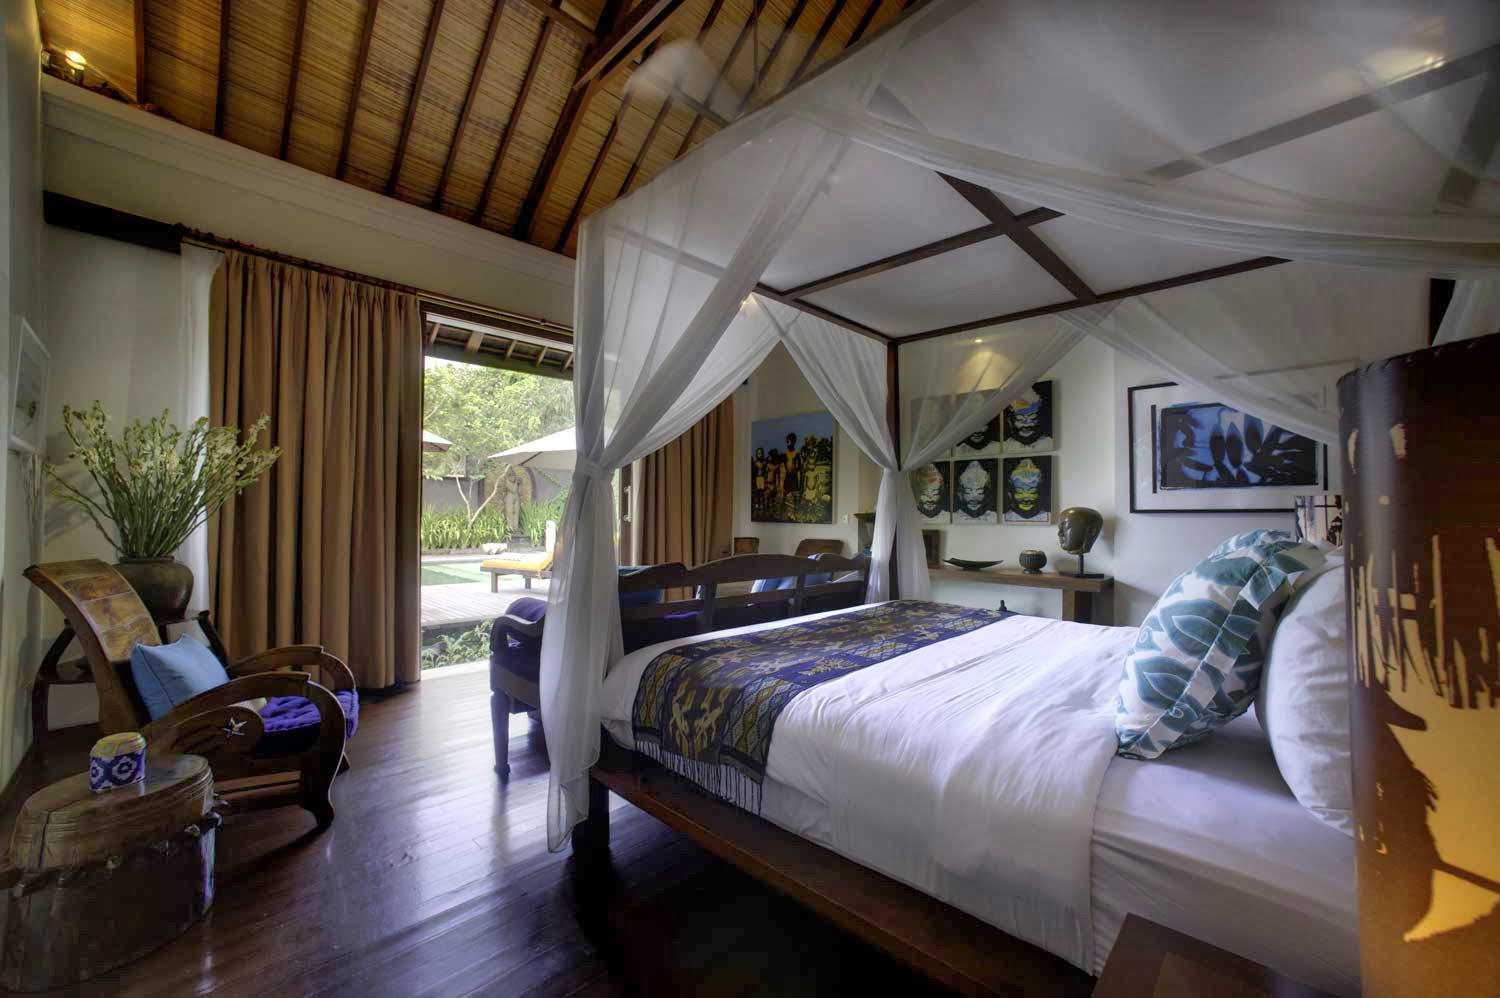 Bedroom Glamor Ideas: Balinese Style Bedroom Glamor Ideas.